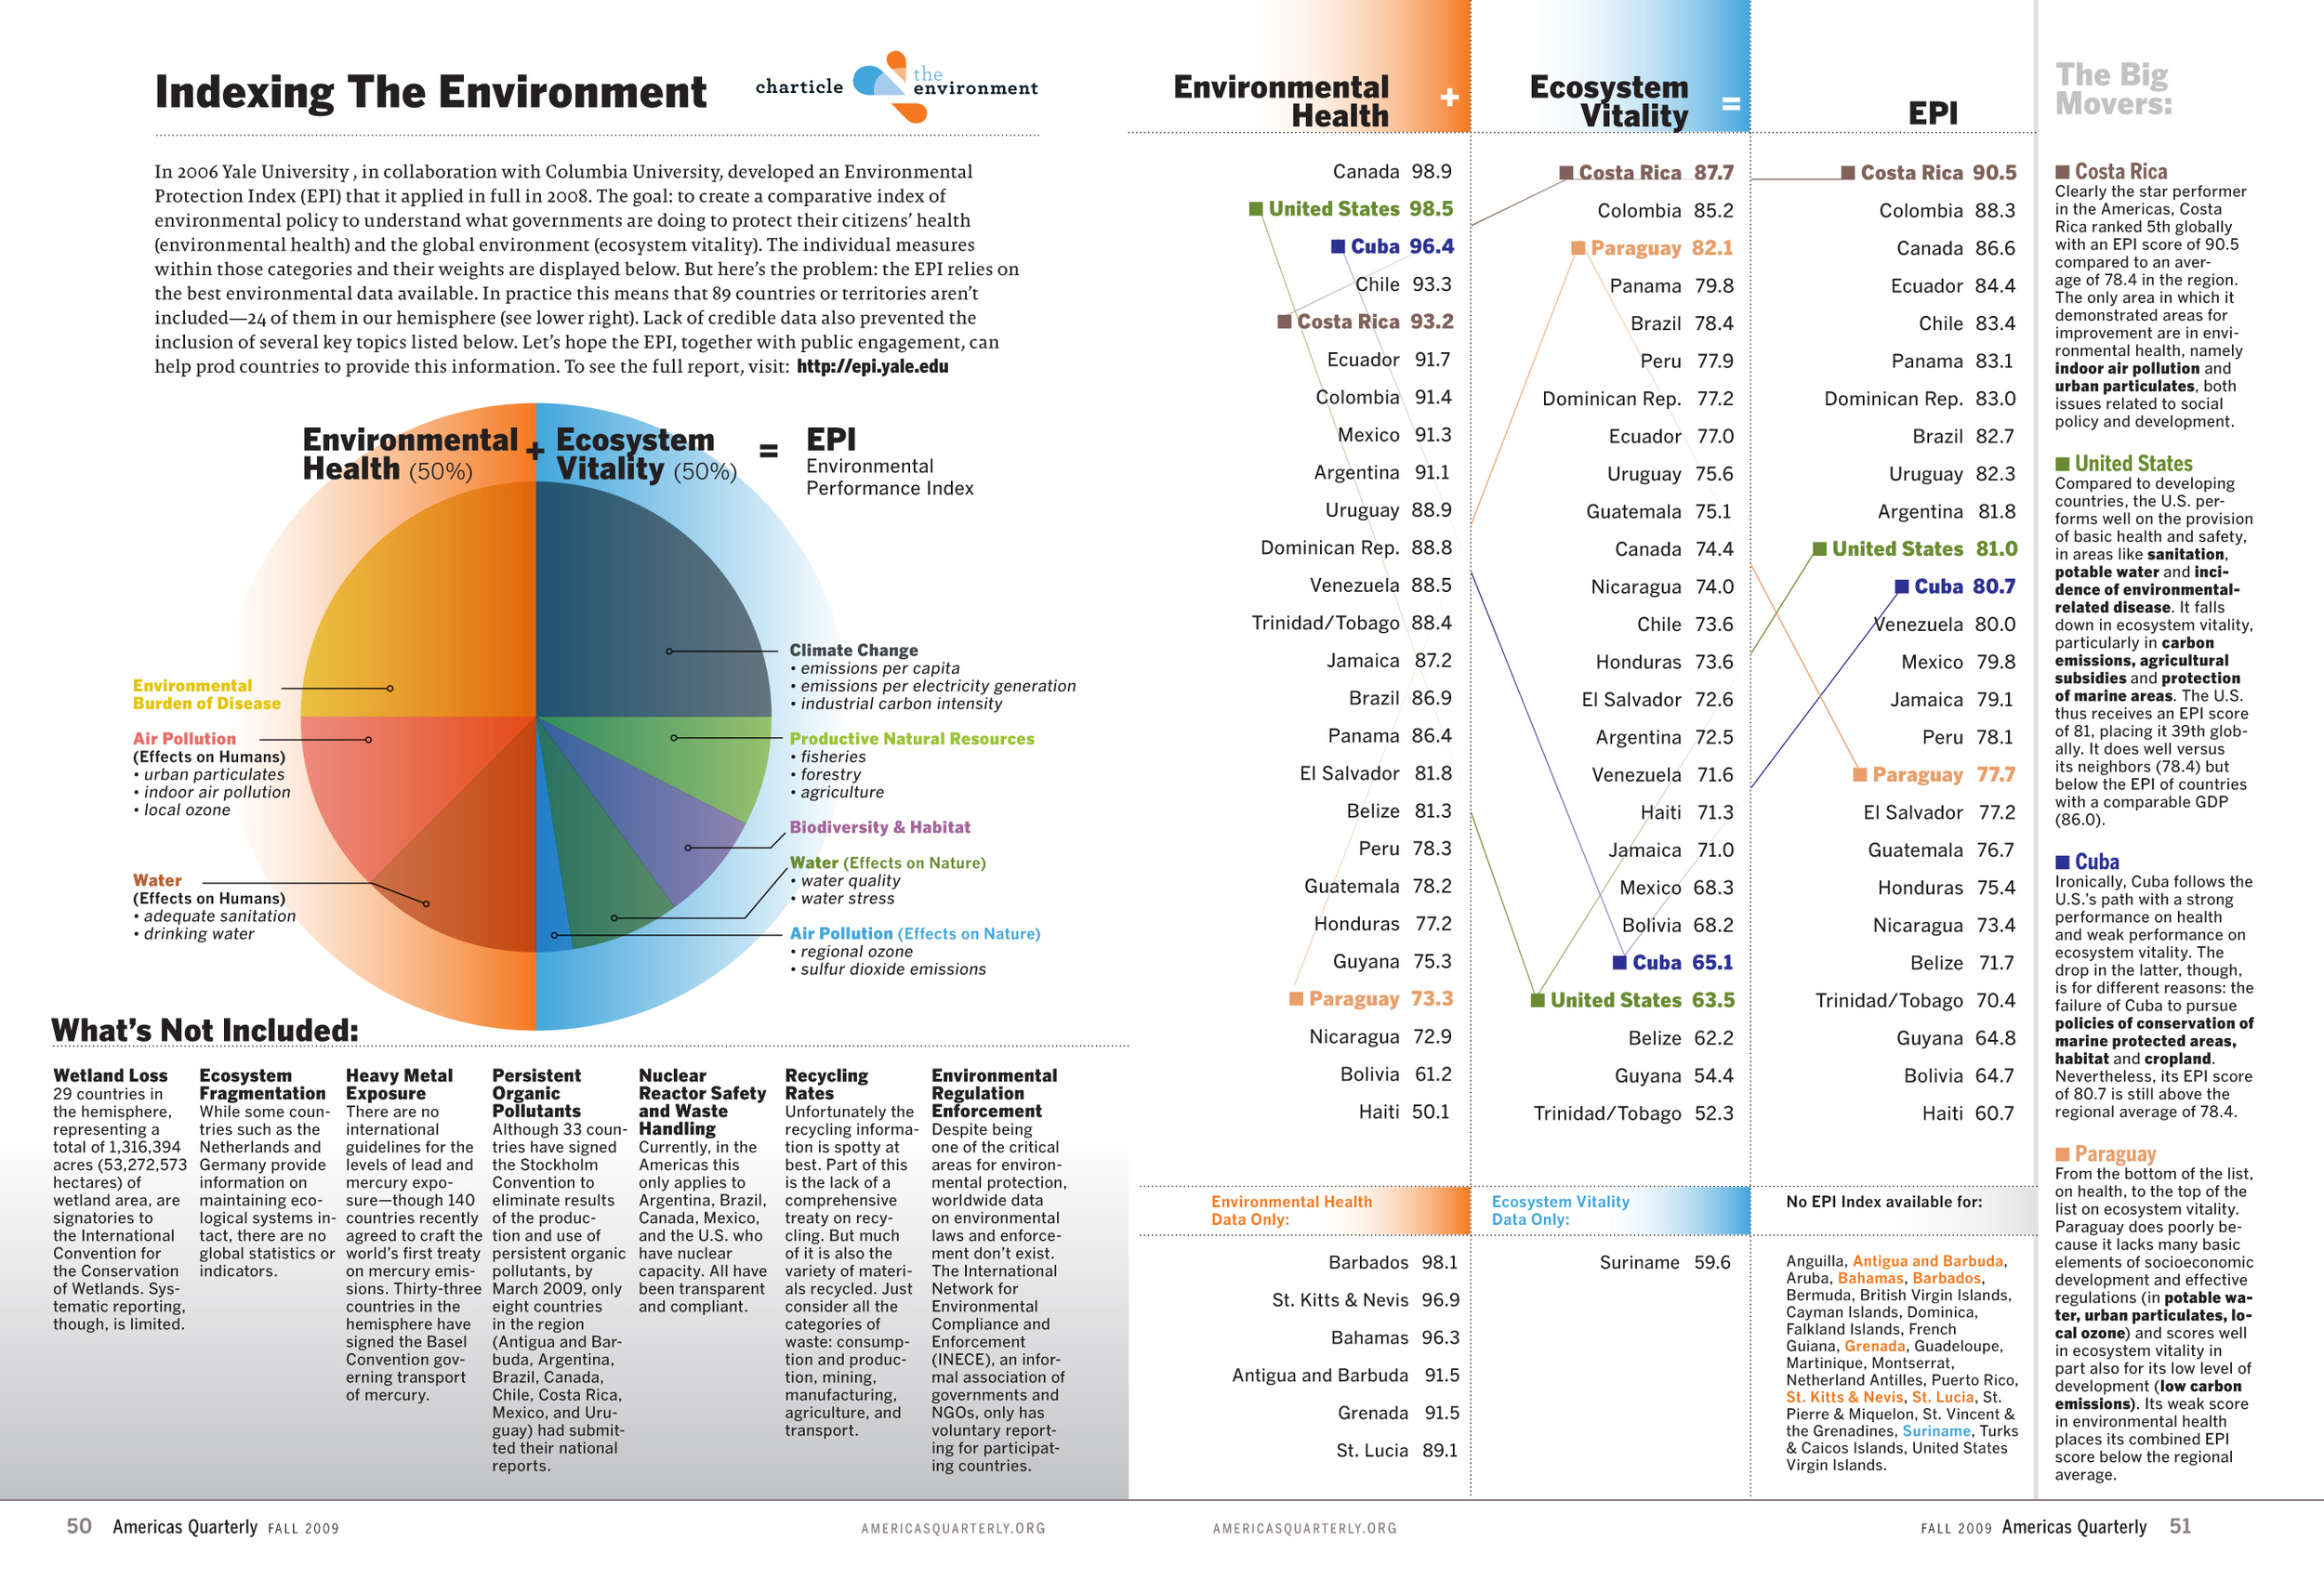 Environmental Performance Index